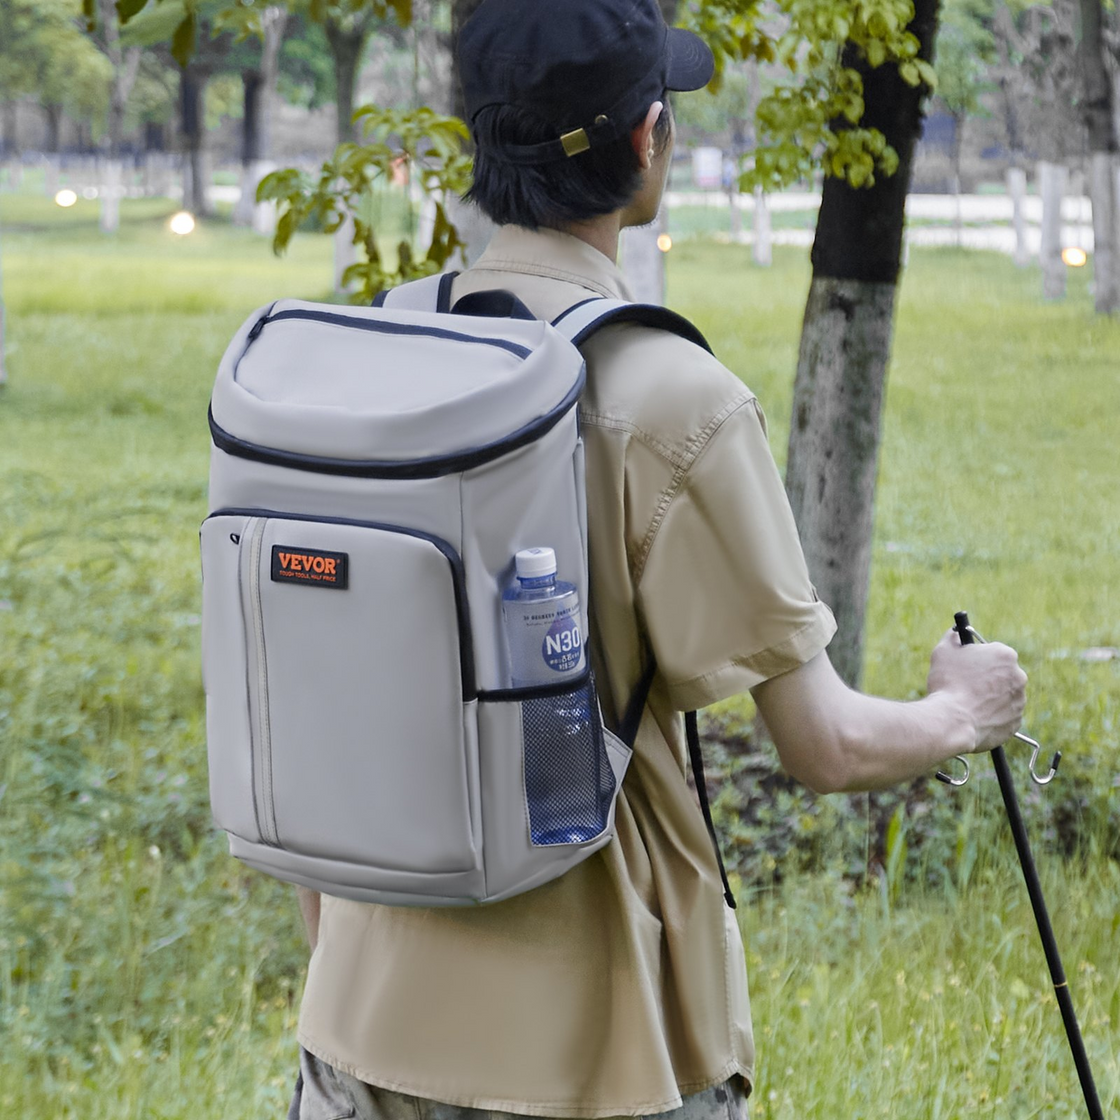 VEVOR Cooler Backpack, 28 Cans Leakproof Backpack Cooler - Waterproof, Insulated, Lightweight Beach Cooler Bag for Hiking, Camping, BBQ - Grey